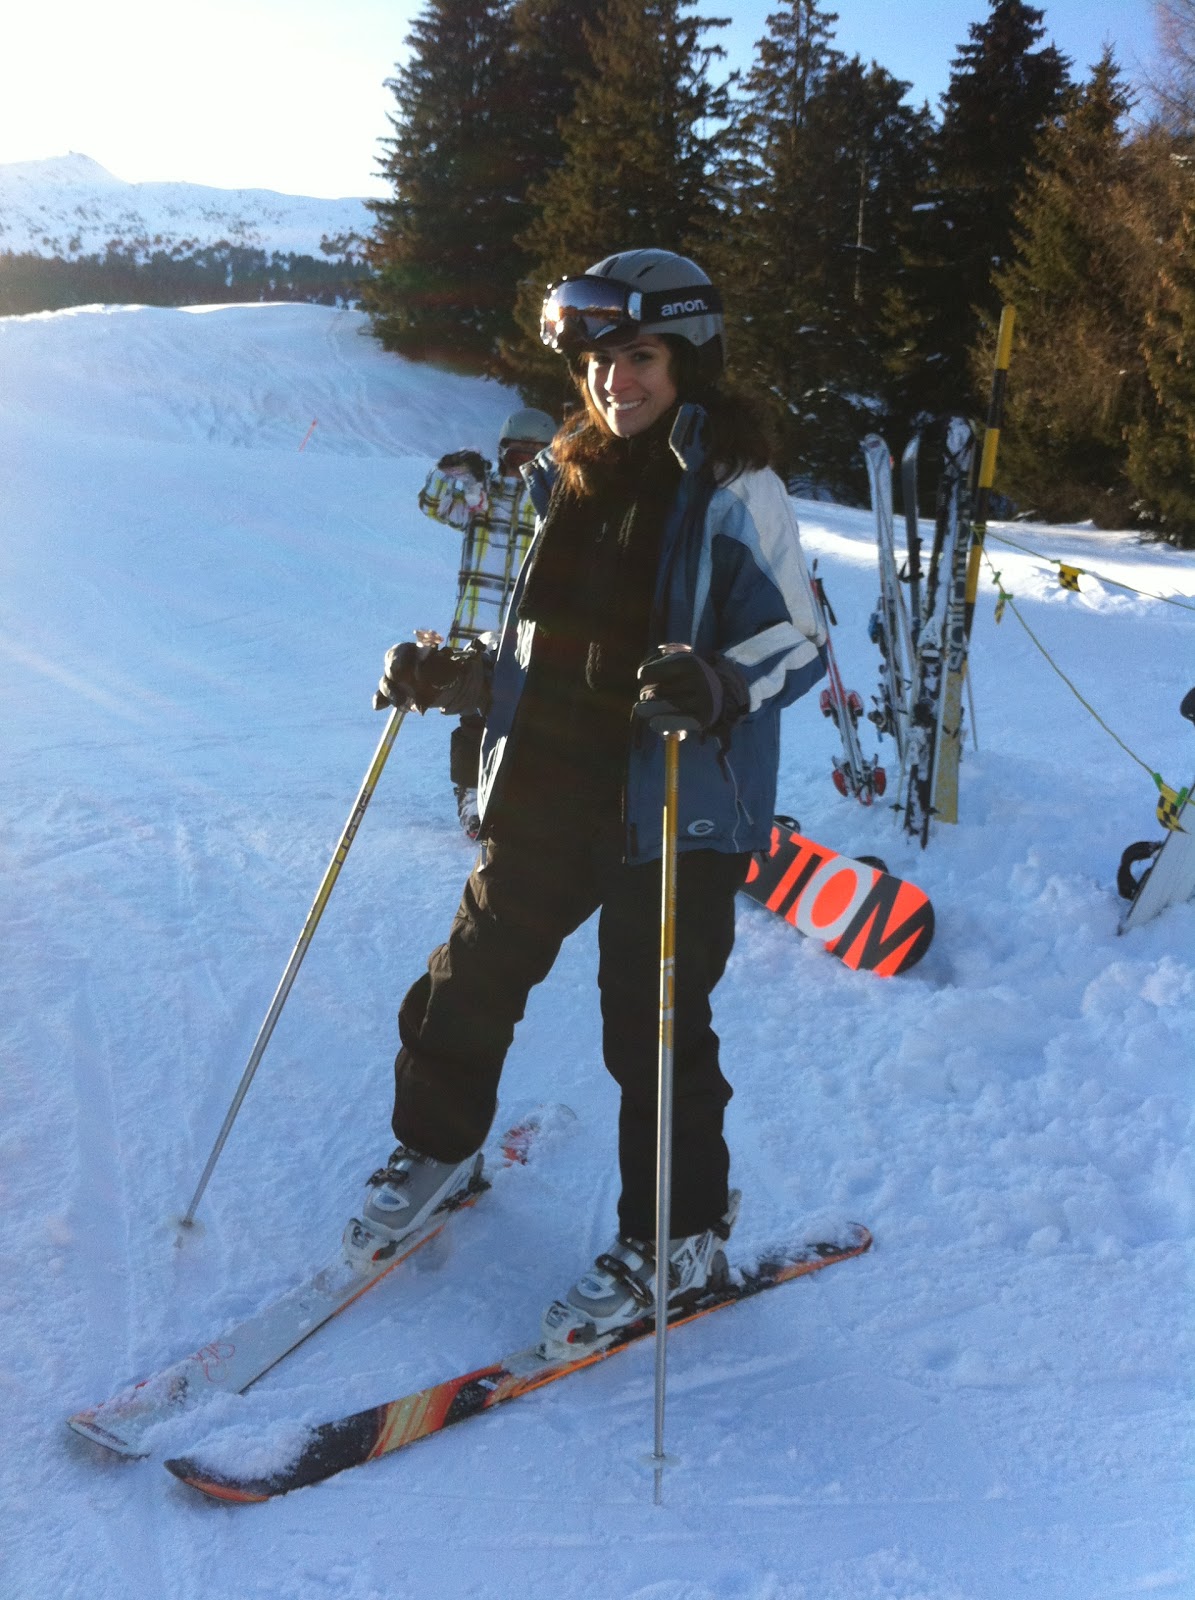 My Inner Ski Bunny Emerged The Honeymoon Life in How To Ski Well